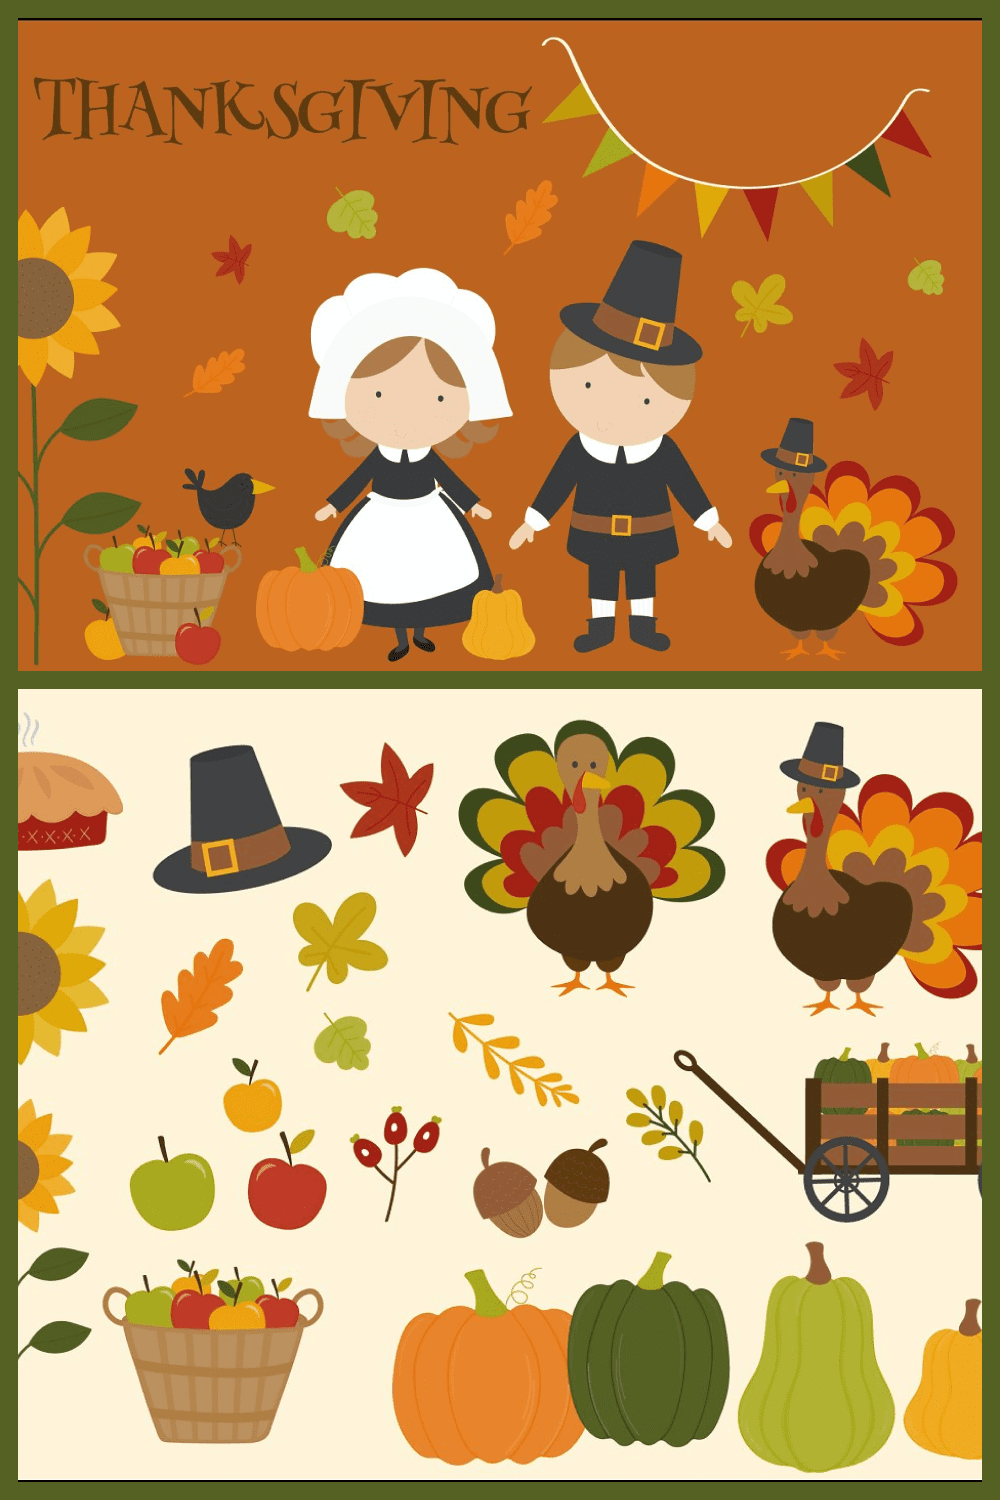 Thanksgiving clipart by Poppymoondesign.